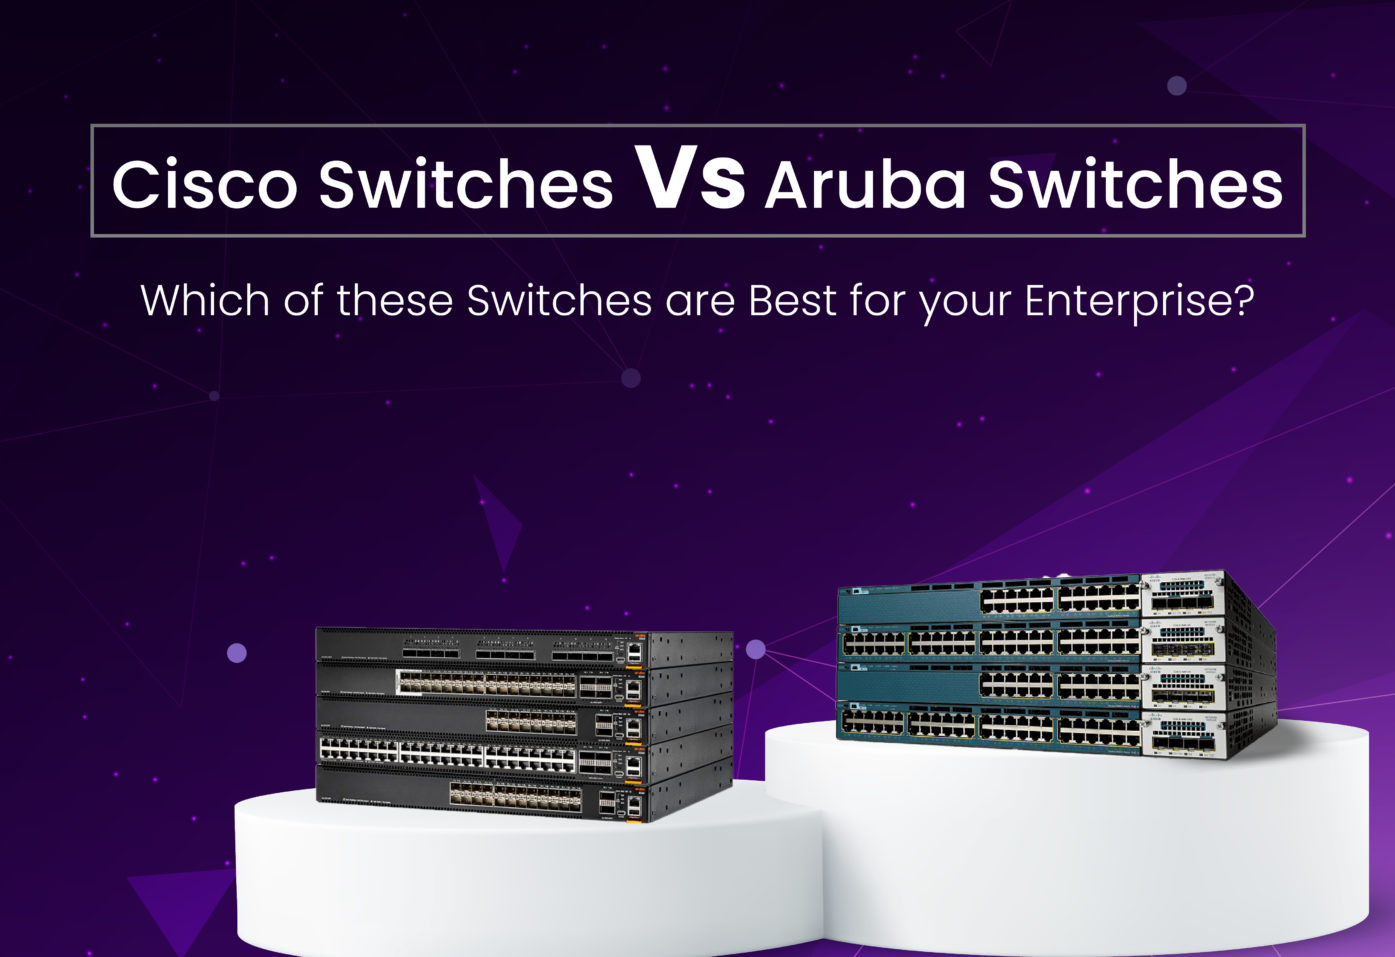 Cisco Switches vs Aruba Switches